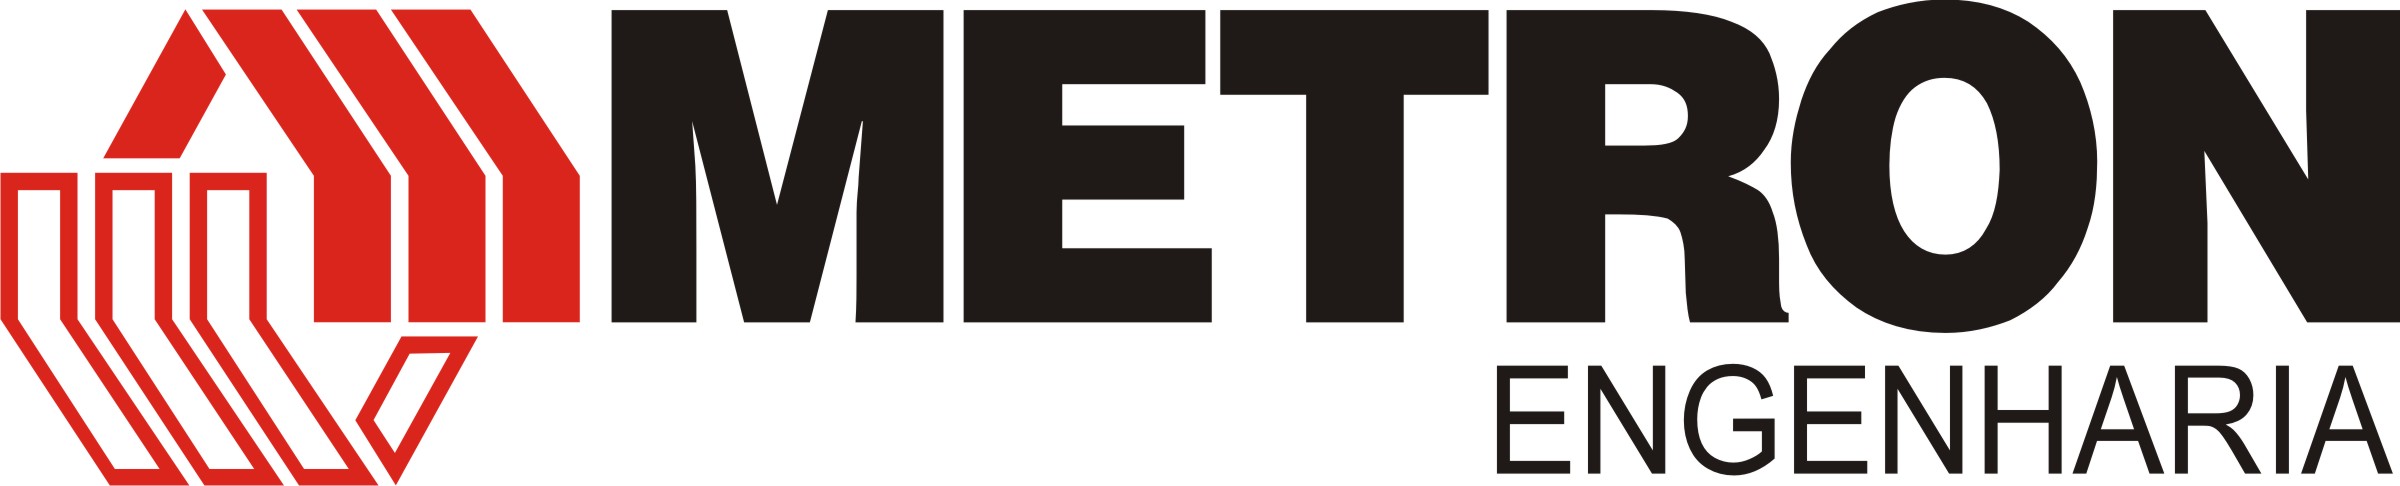 Metron Engenharia Logo photo - 1